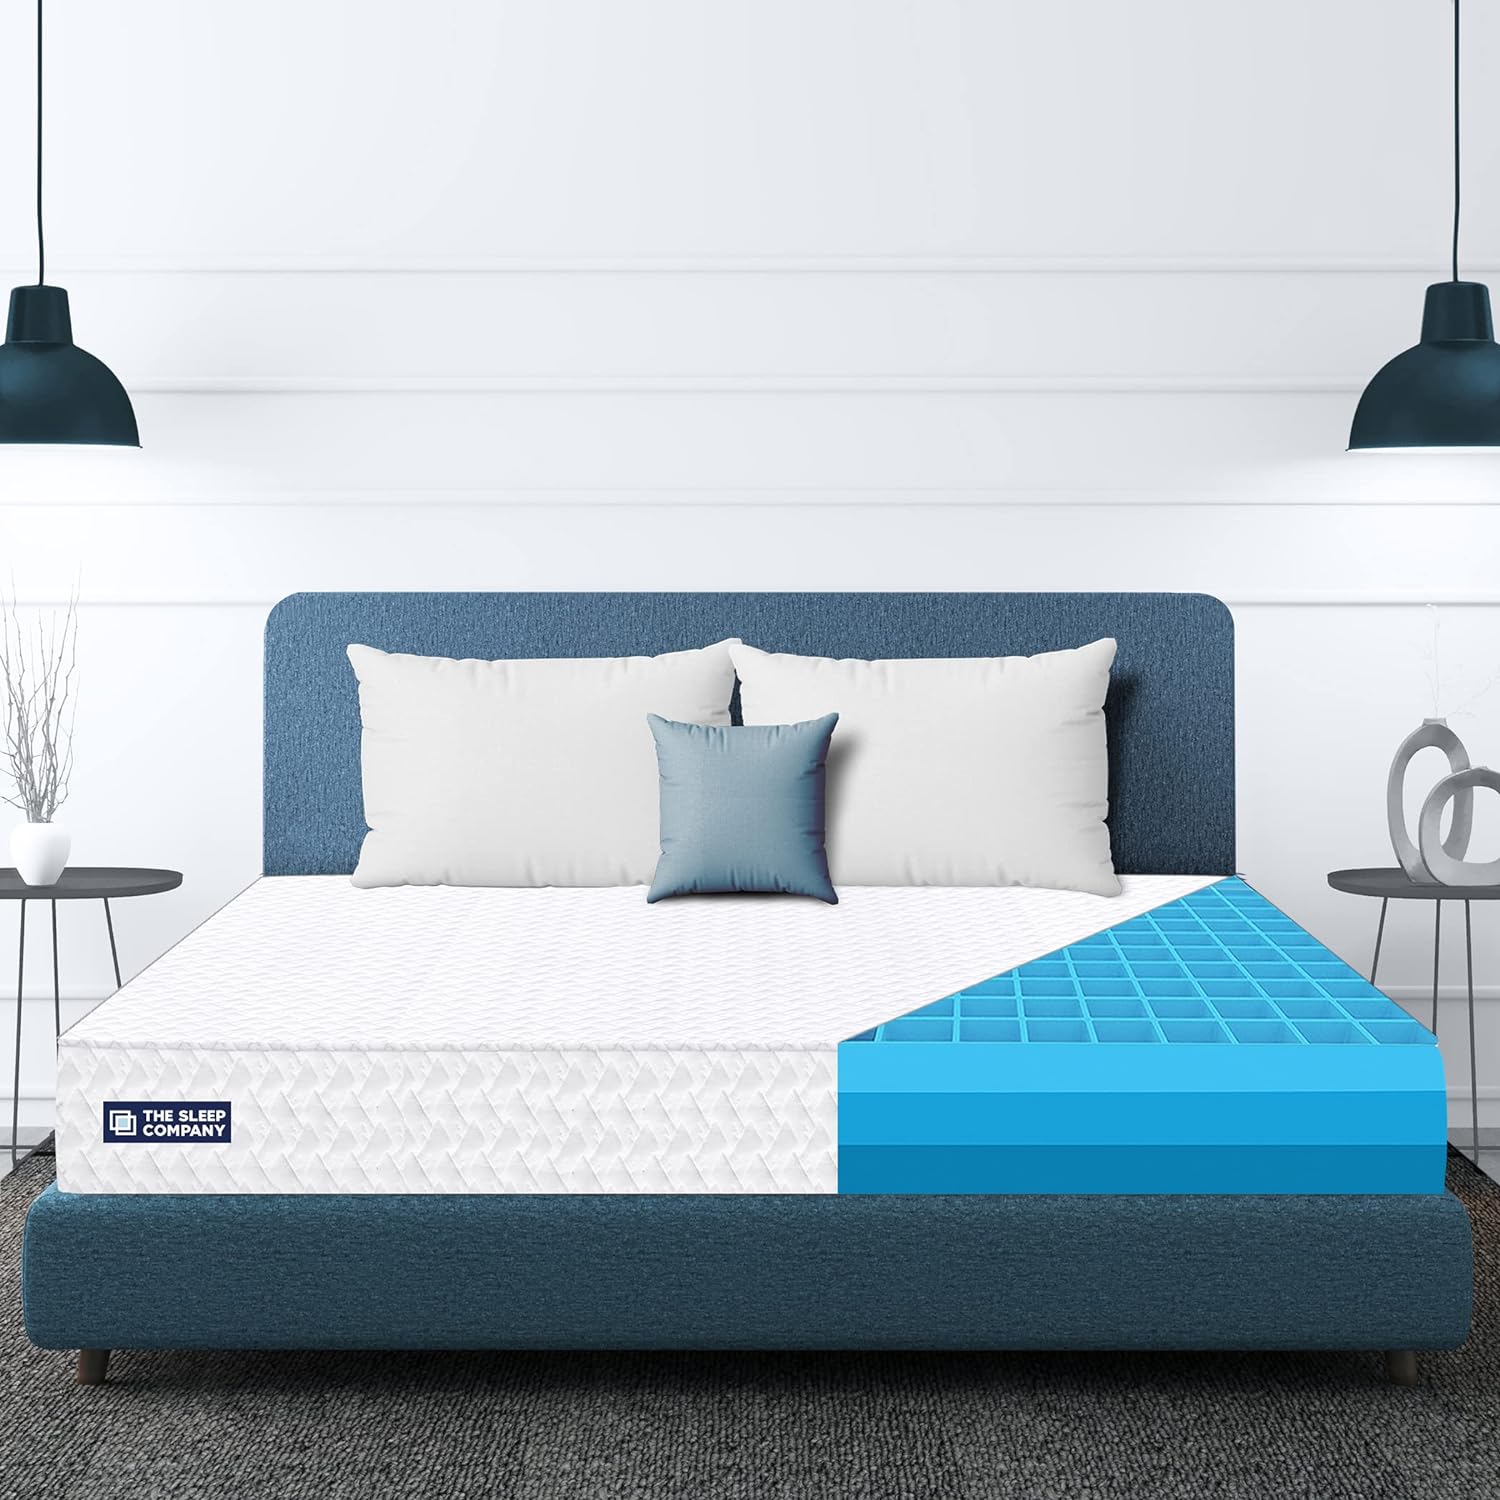 The sleep company mattress